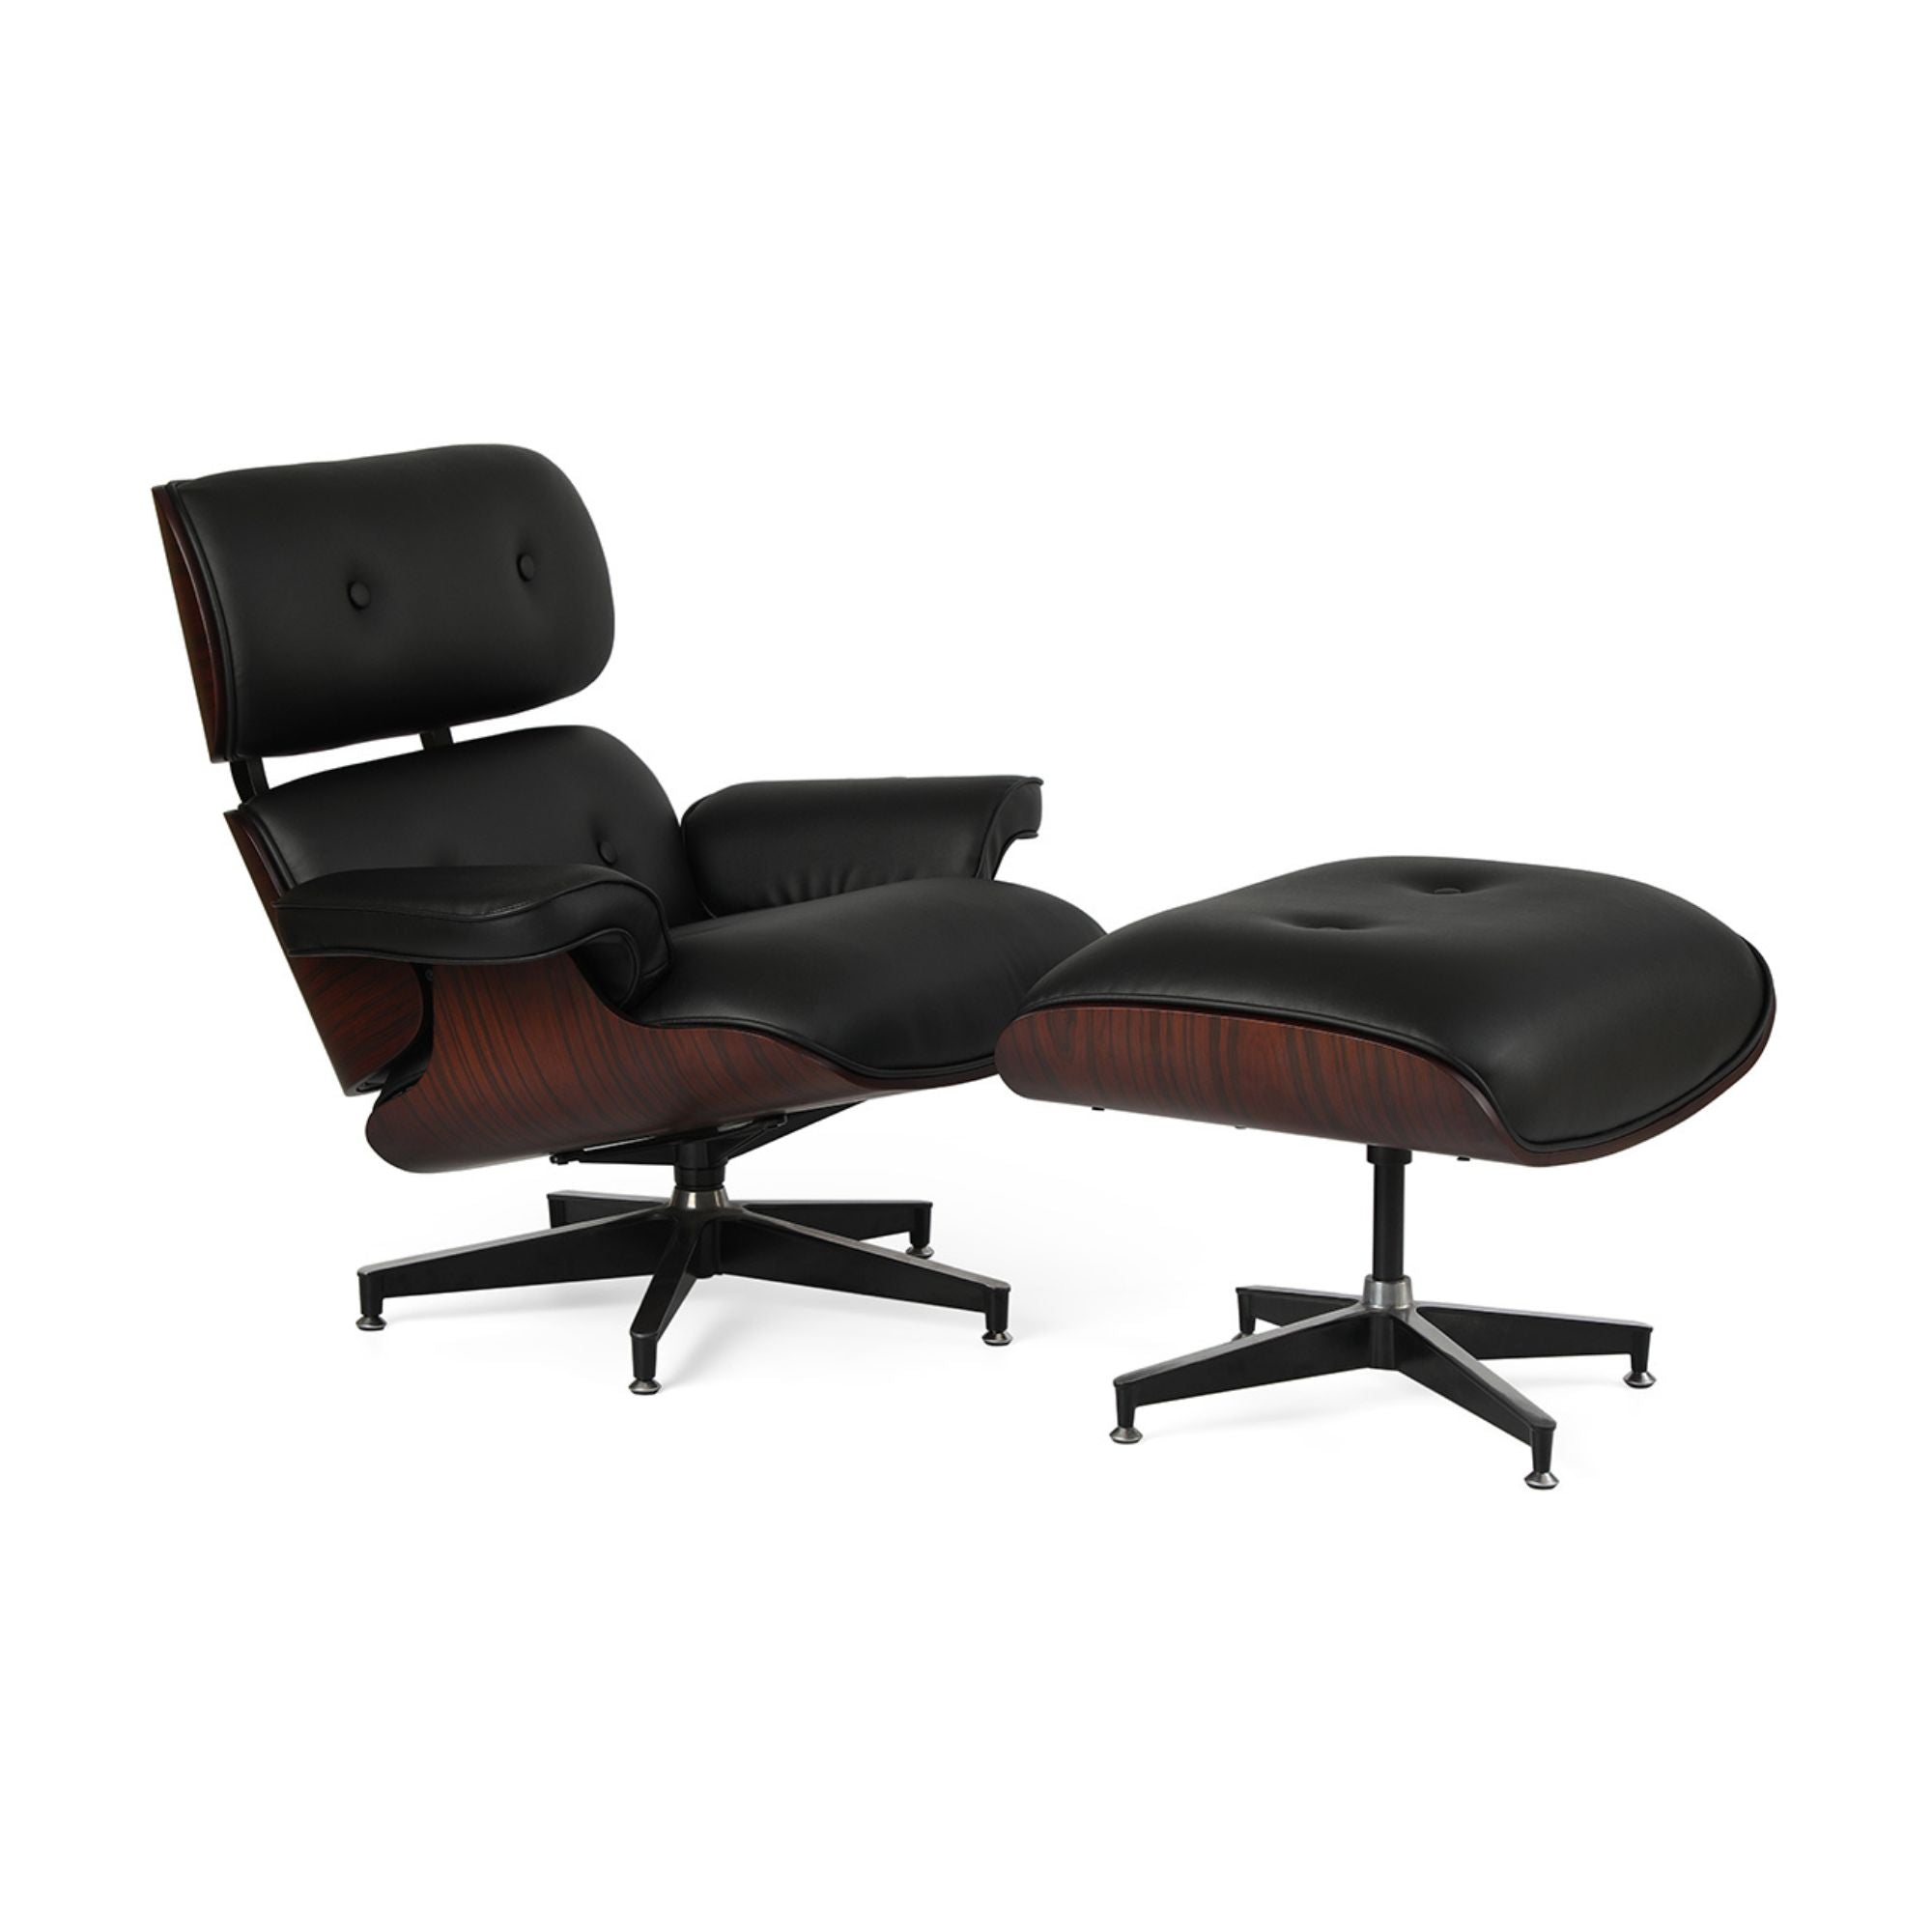 Esthetica Jordan Lounge Chair, Esthetica, Chair - AVStore.in